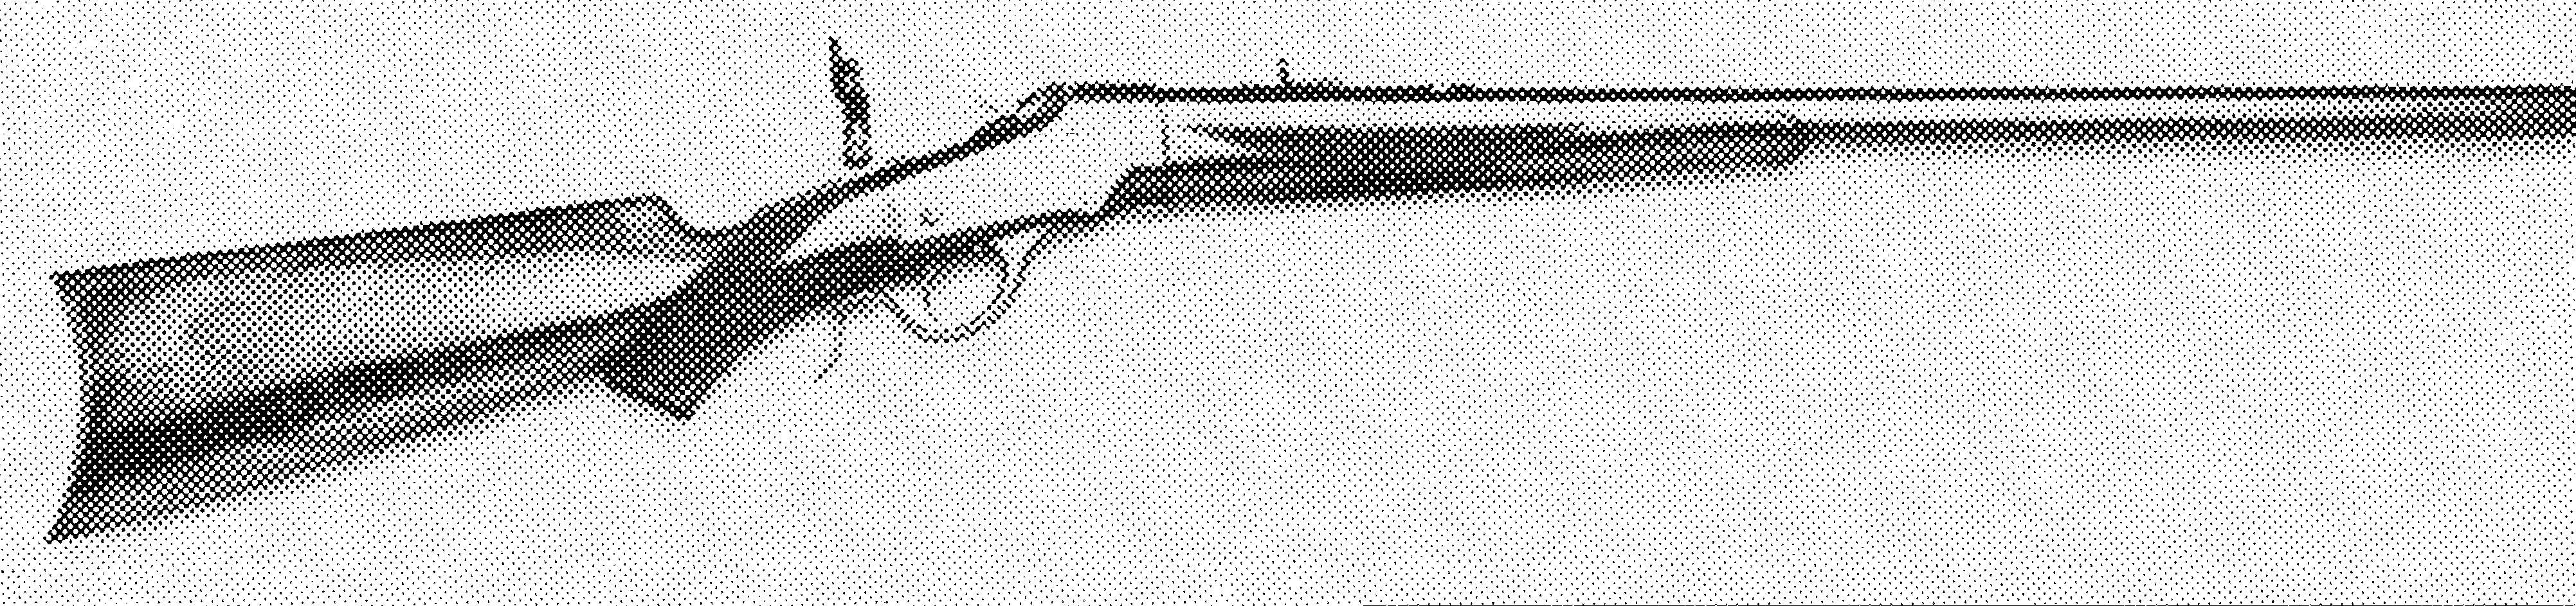 Standard High Wall Rifle